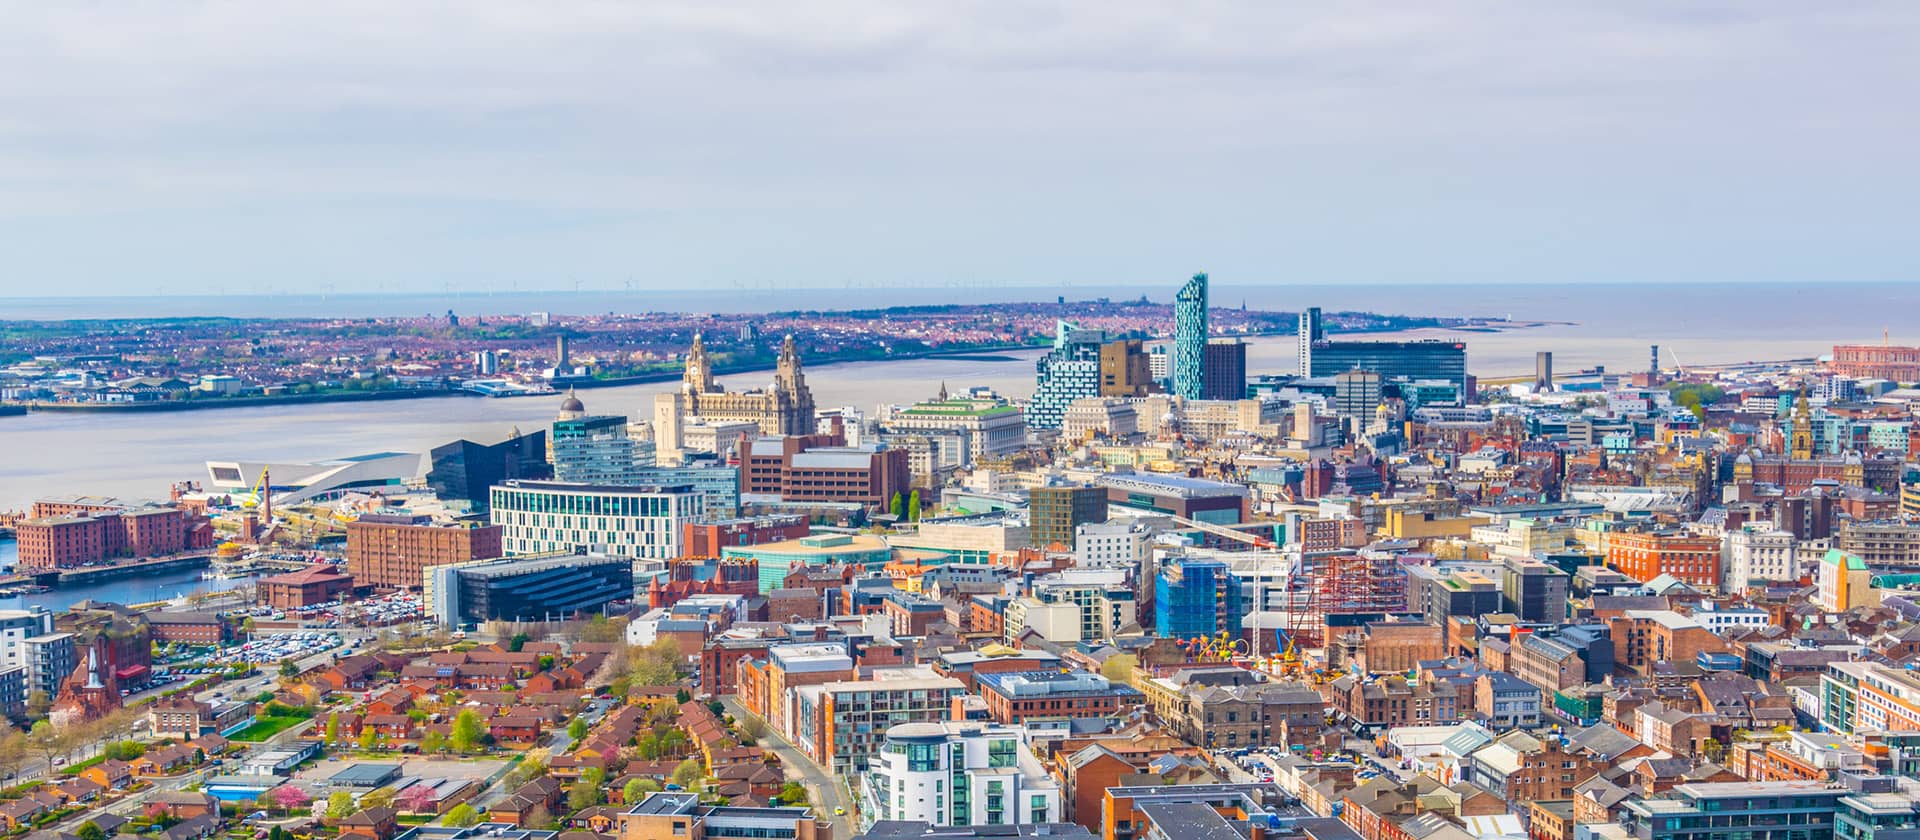 Aerial shot of Liverpool city centre